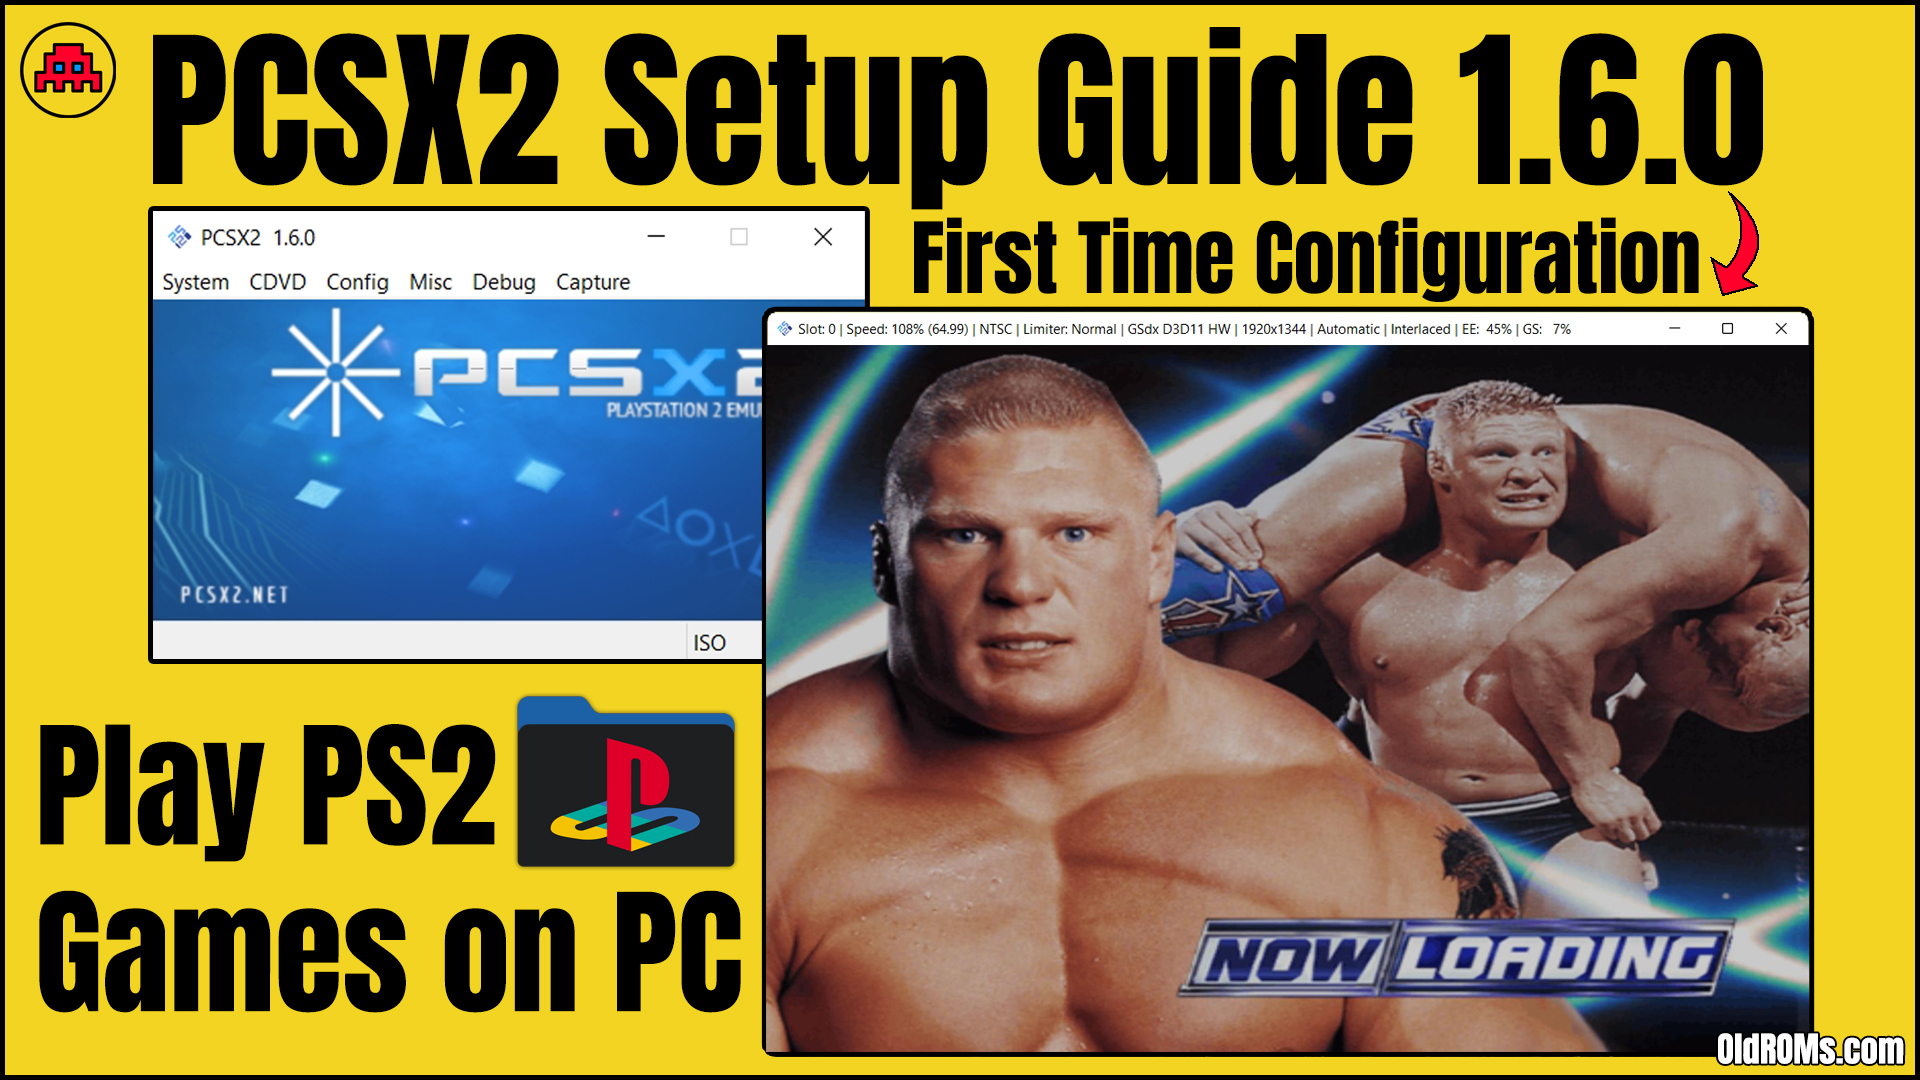 PCSX2 Setup Guide 1.6.0 First Time Configuration